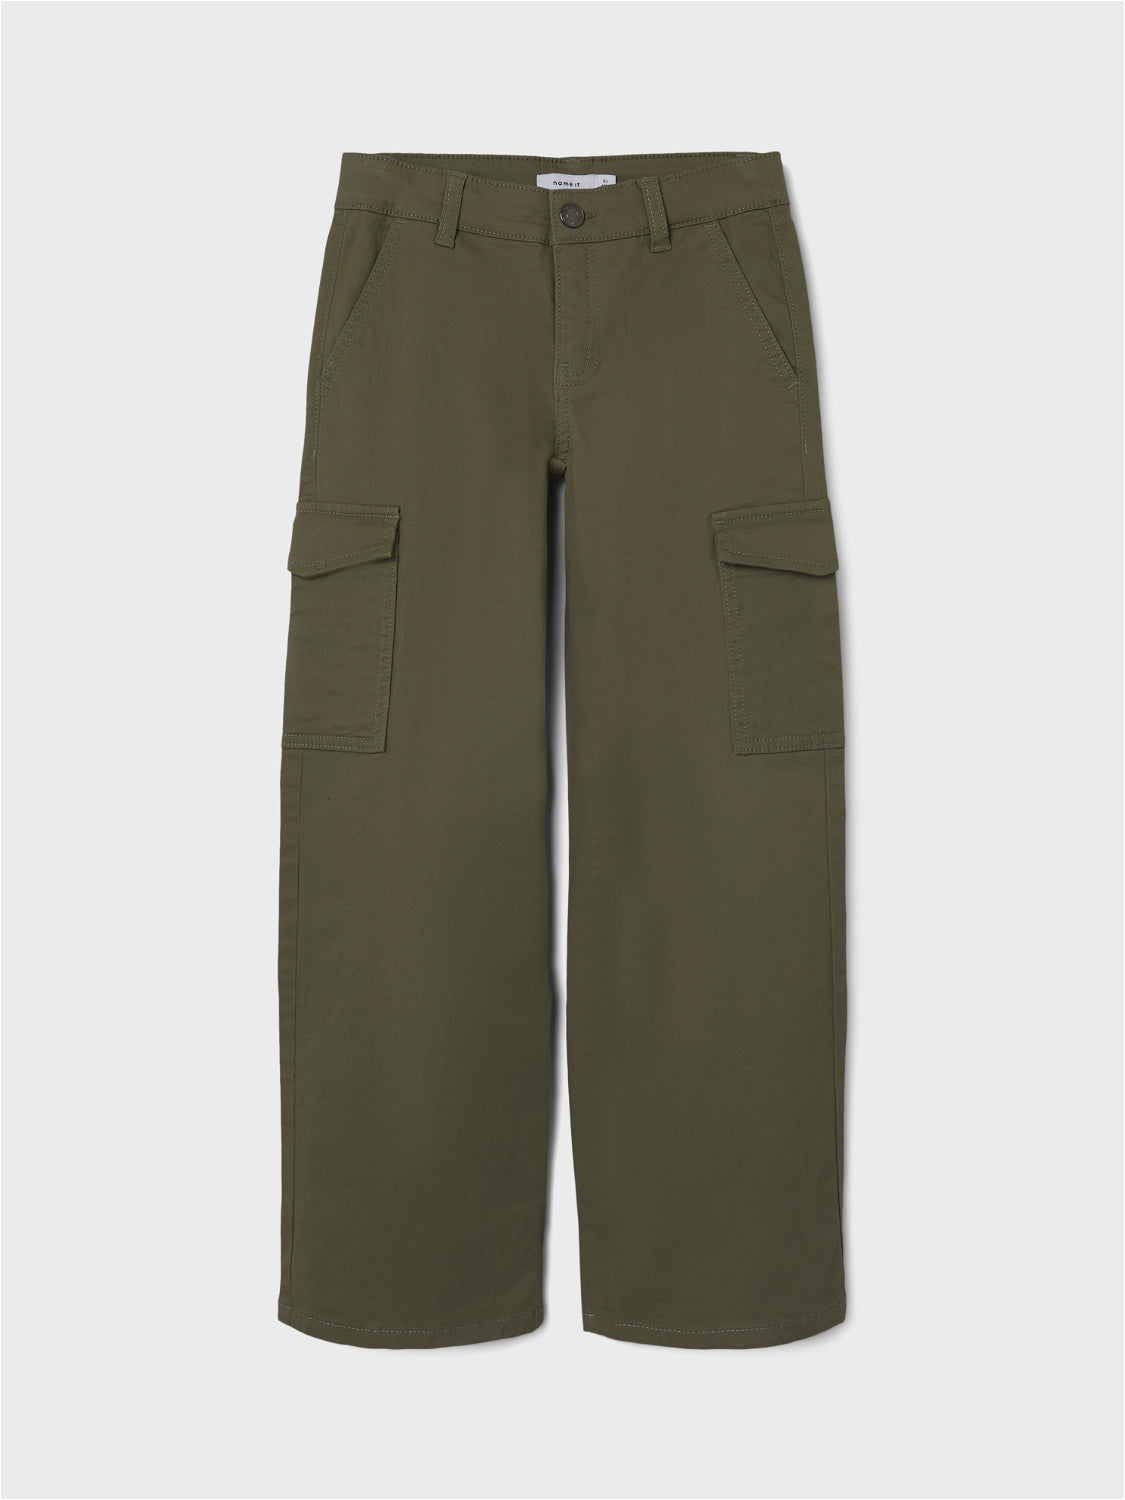 NKFROSE Trousers - Deep Lichen Green